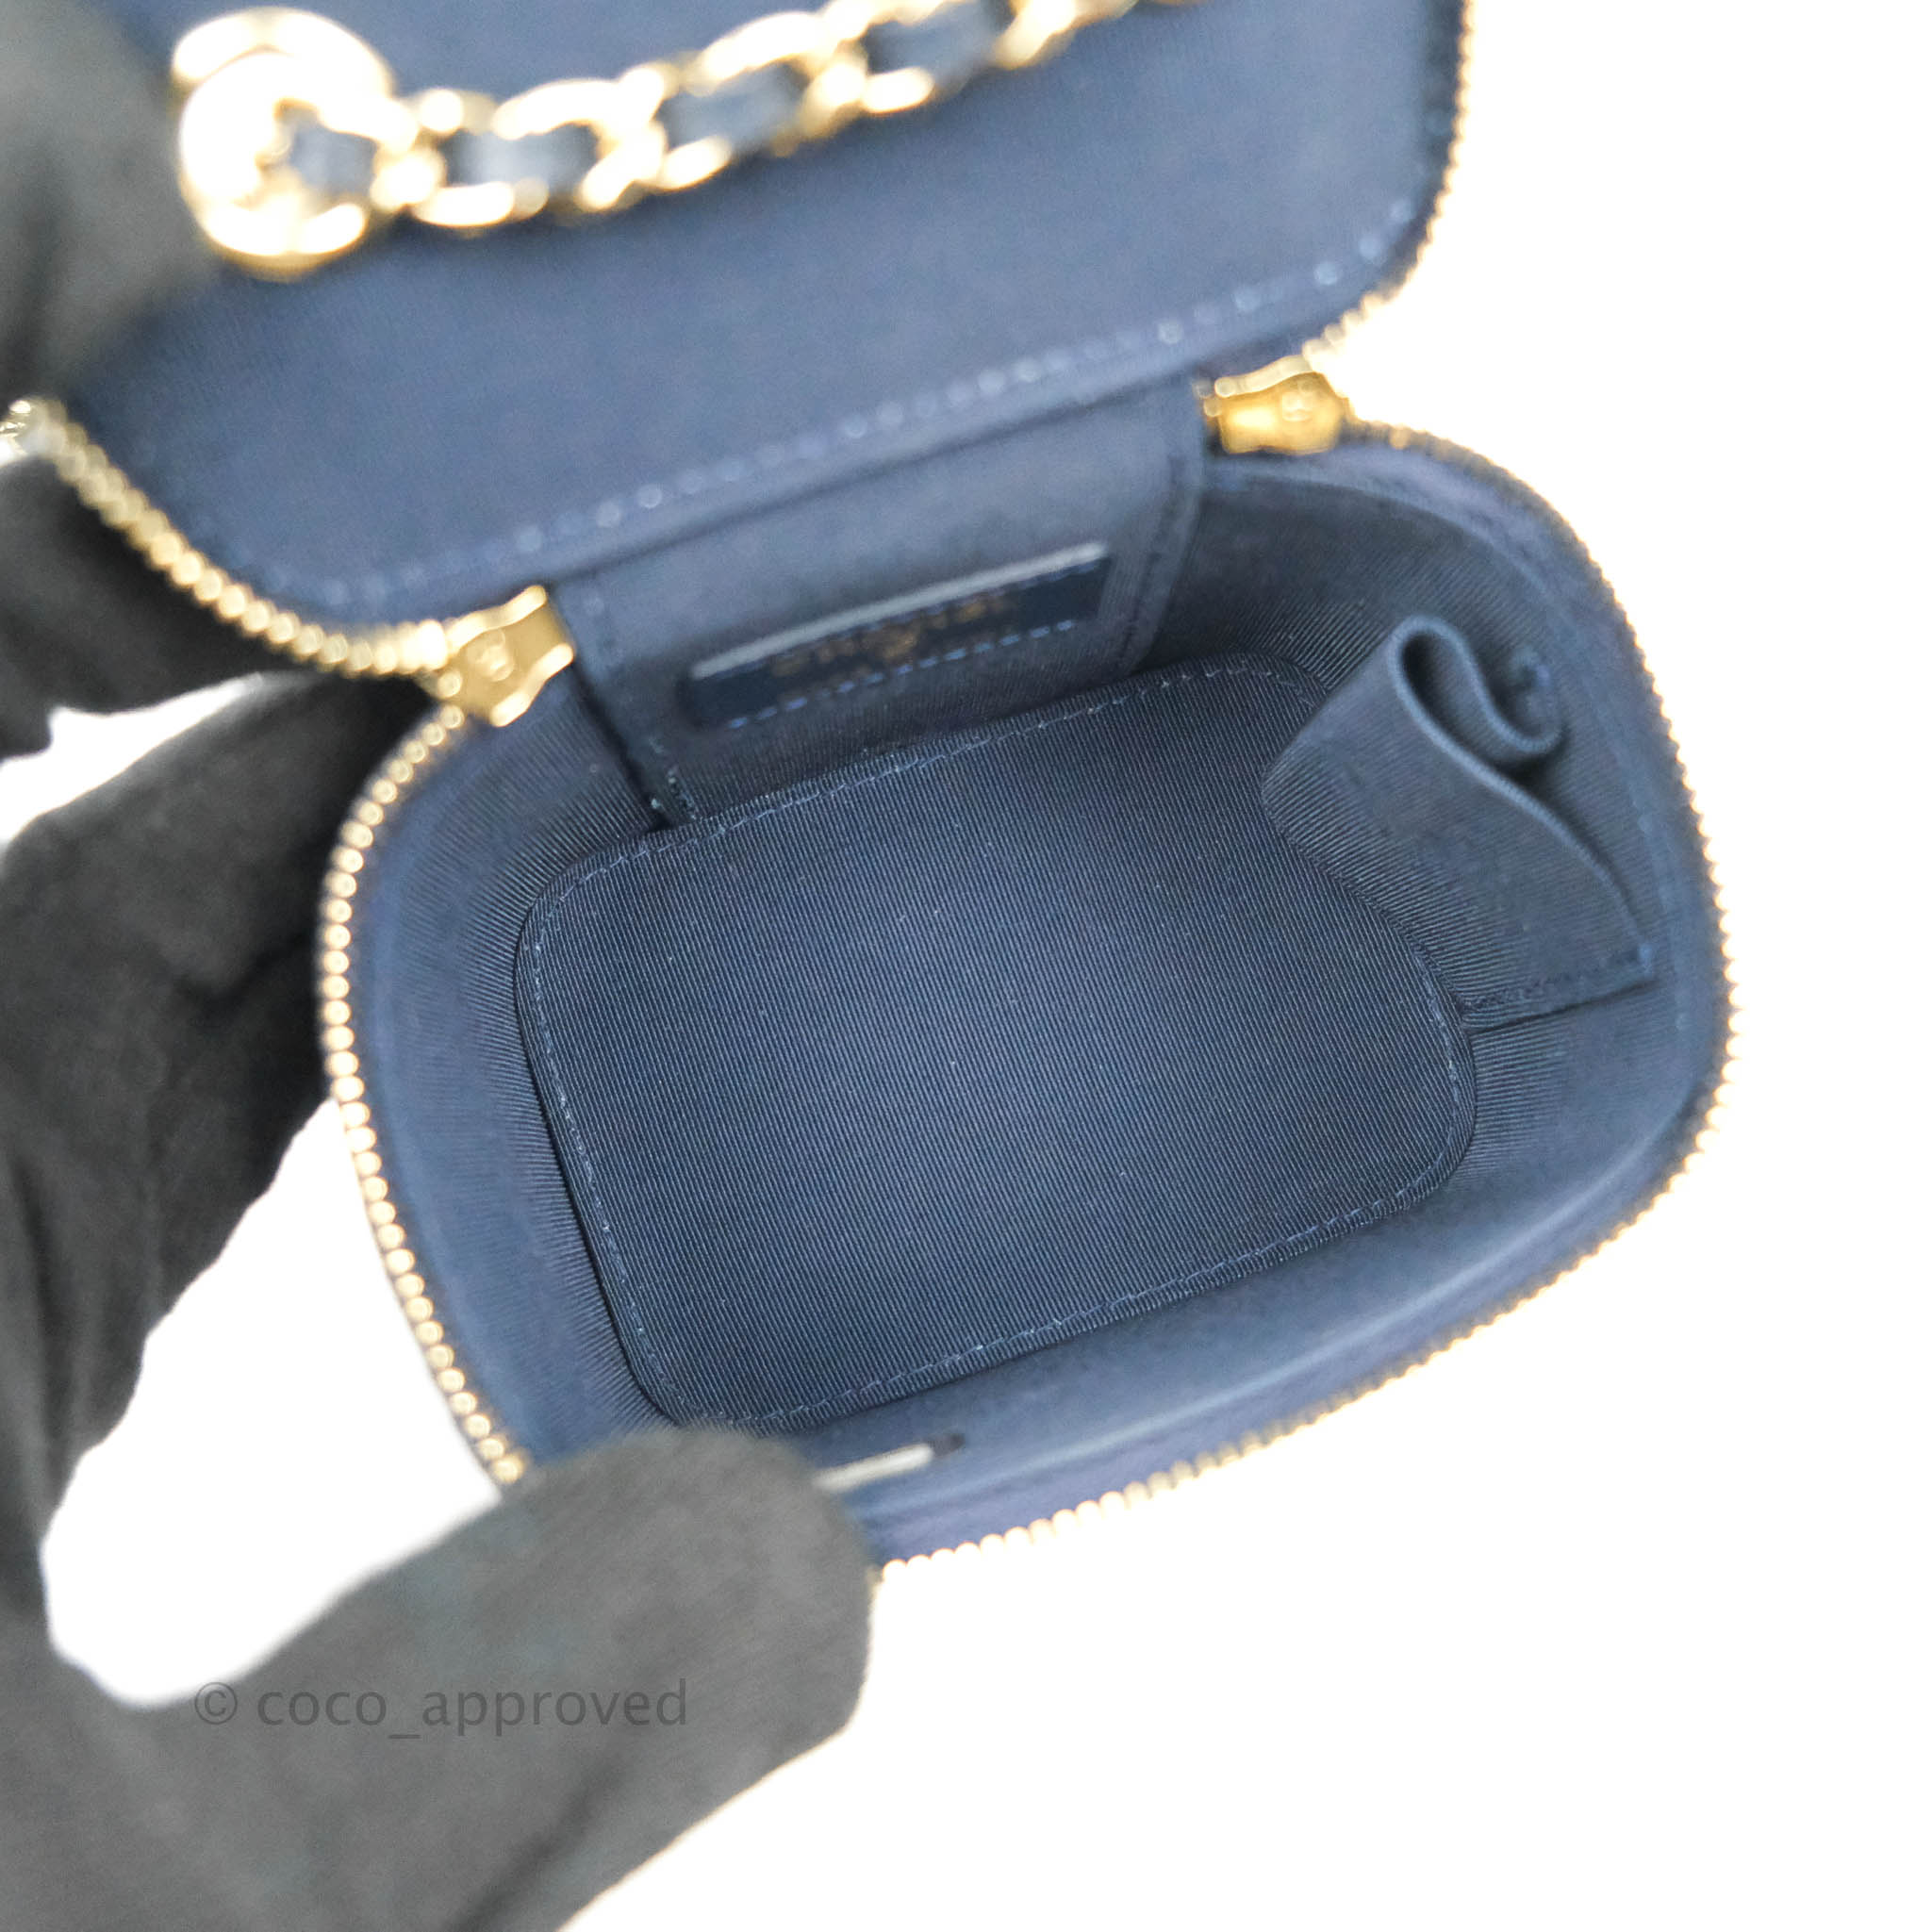 Chanel CC Zip Around Top Handle Vertical Vanity Case with Chain